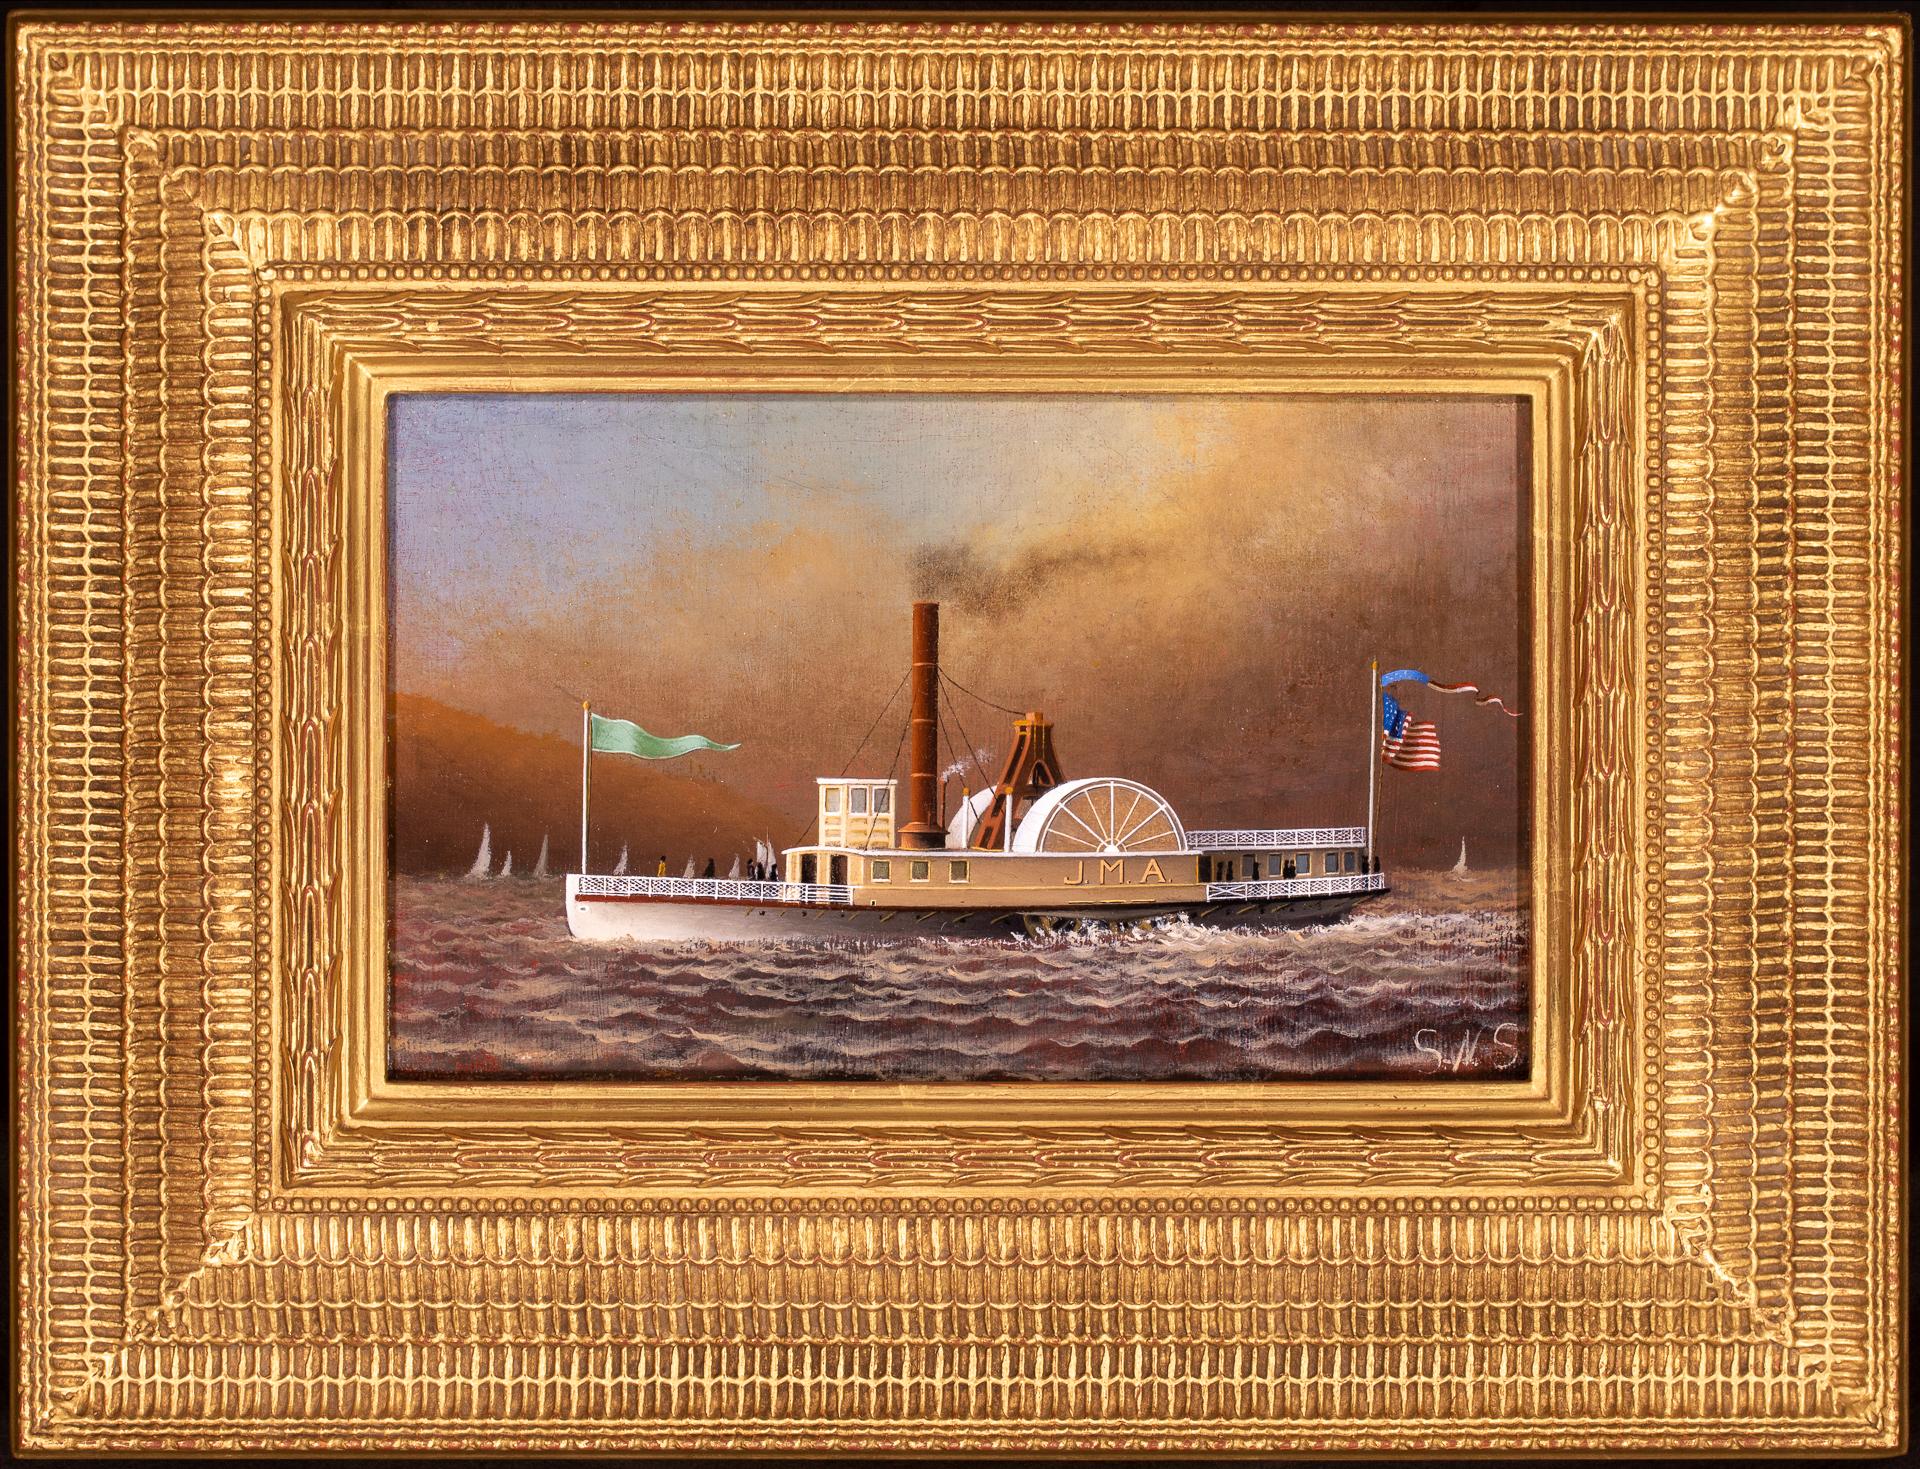 The Hudson River Sidewheel Steamer J.M.A. - Painting by Samuel Ward Stanton